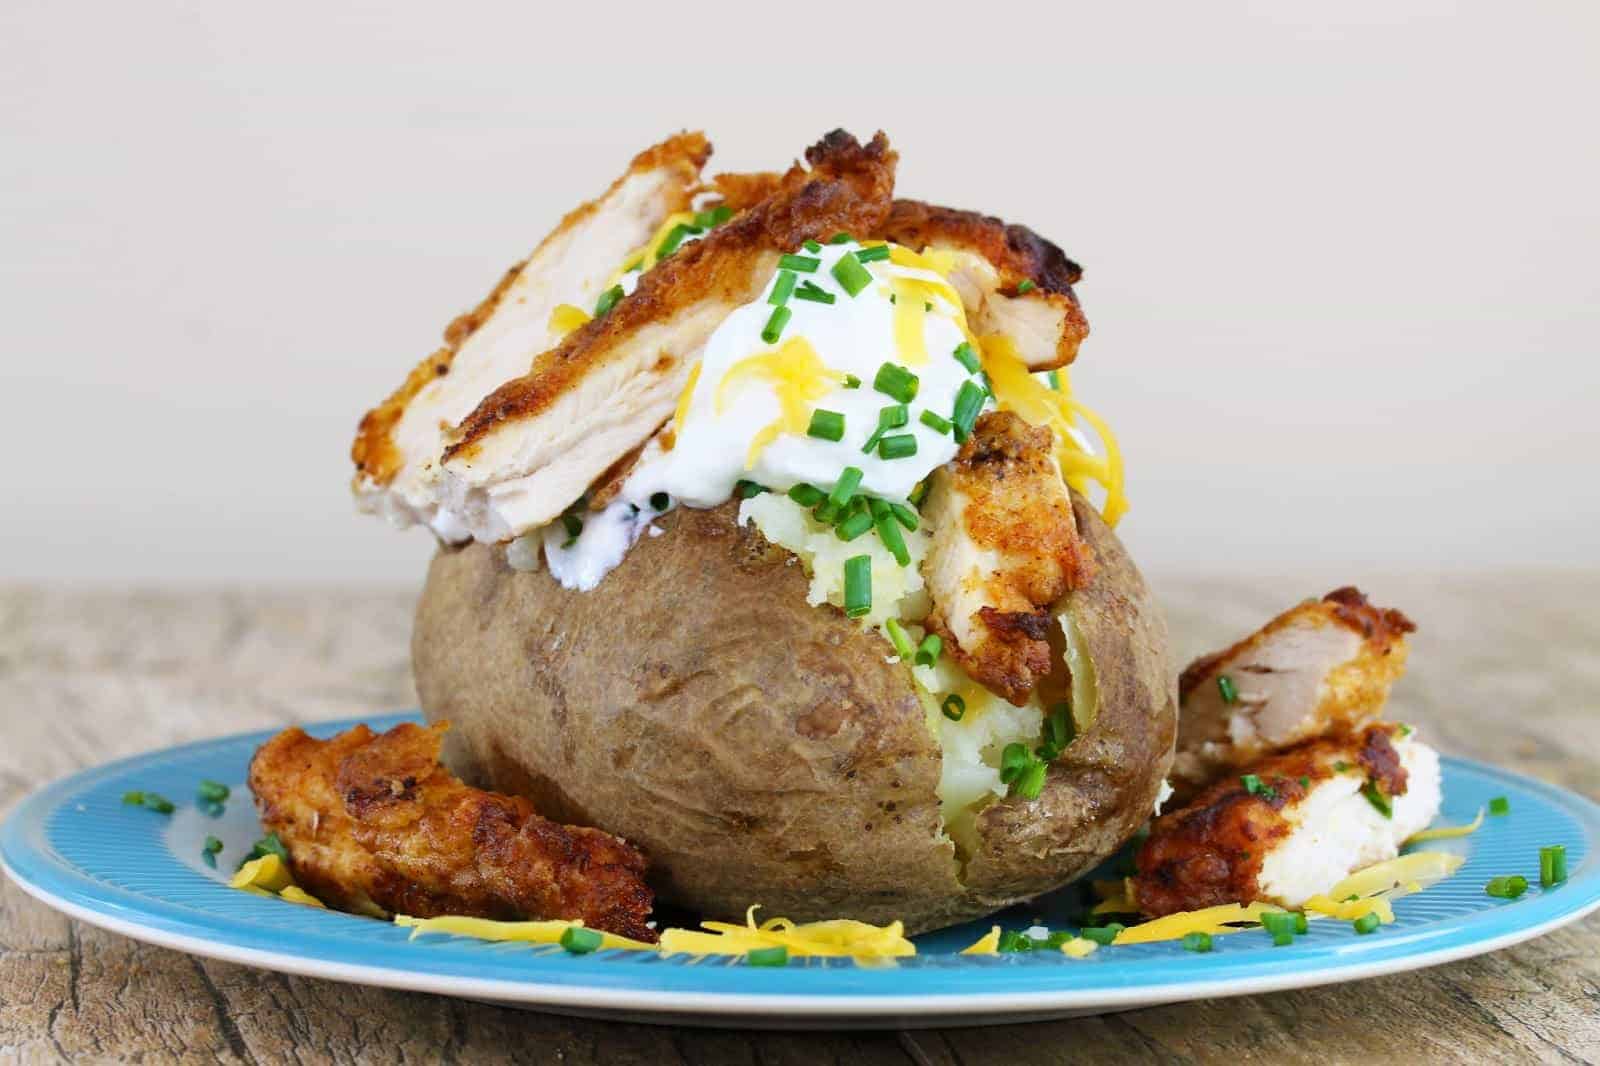 Fried chicken stuffed into a baked potato on a blue plate.